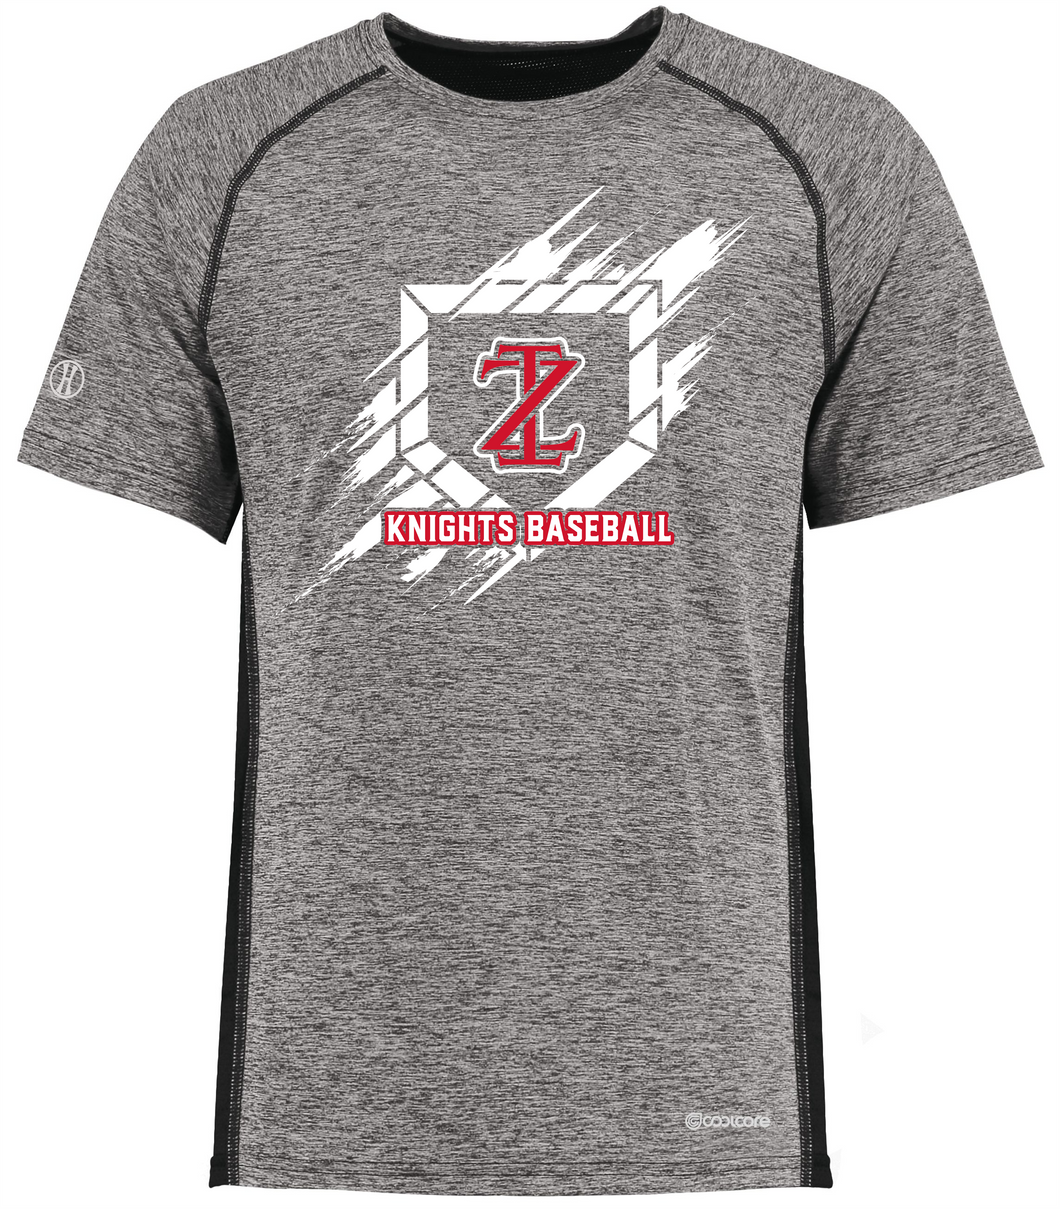 ITZ Performance T-Shirt Knights Baseball